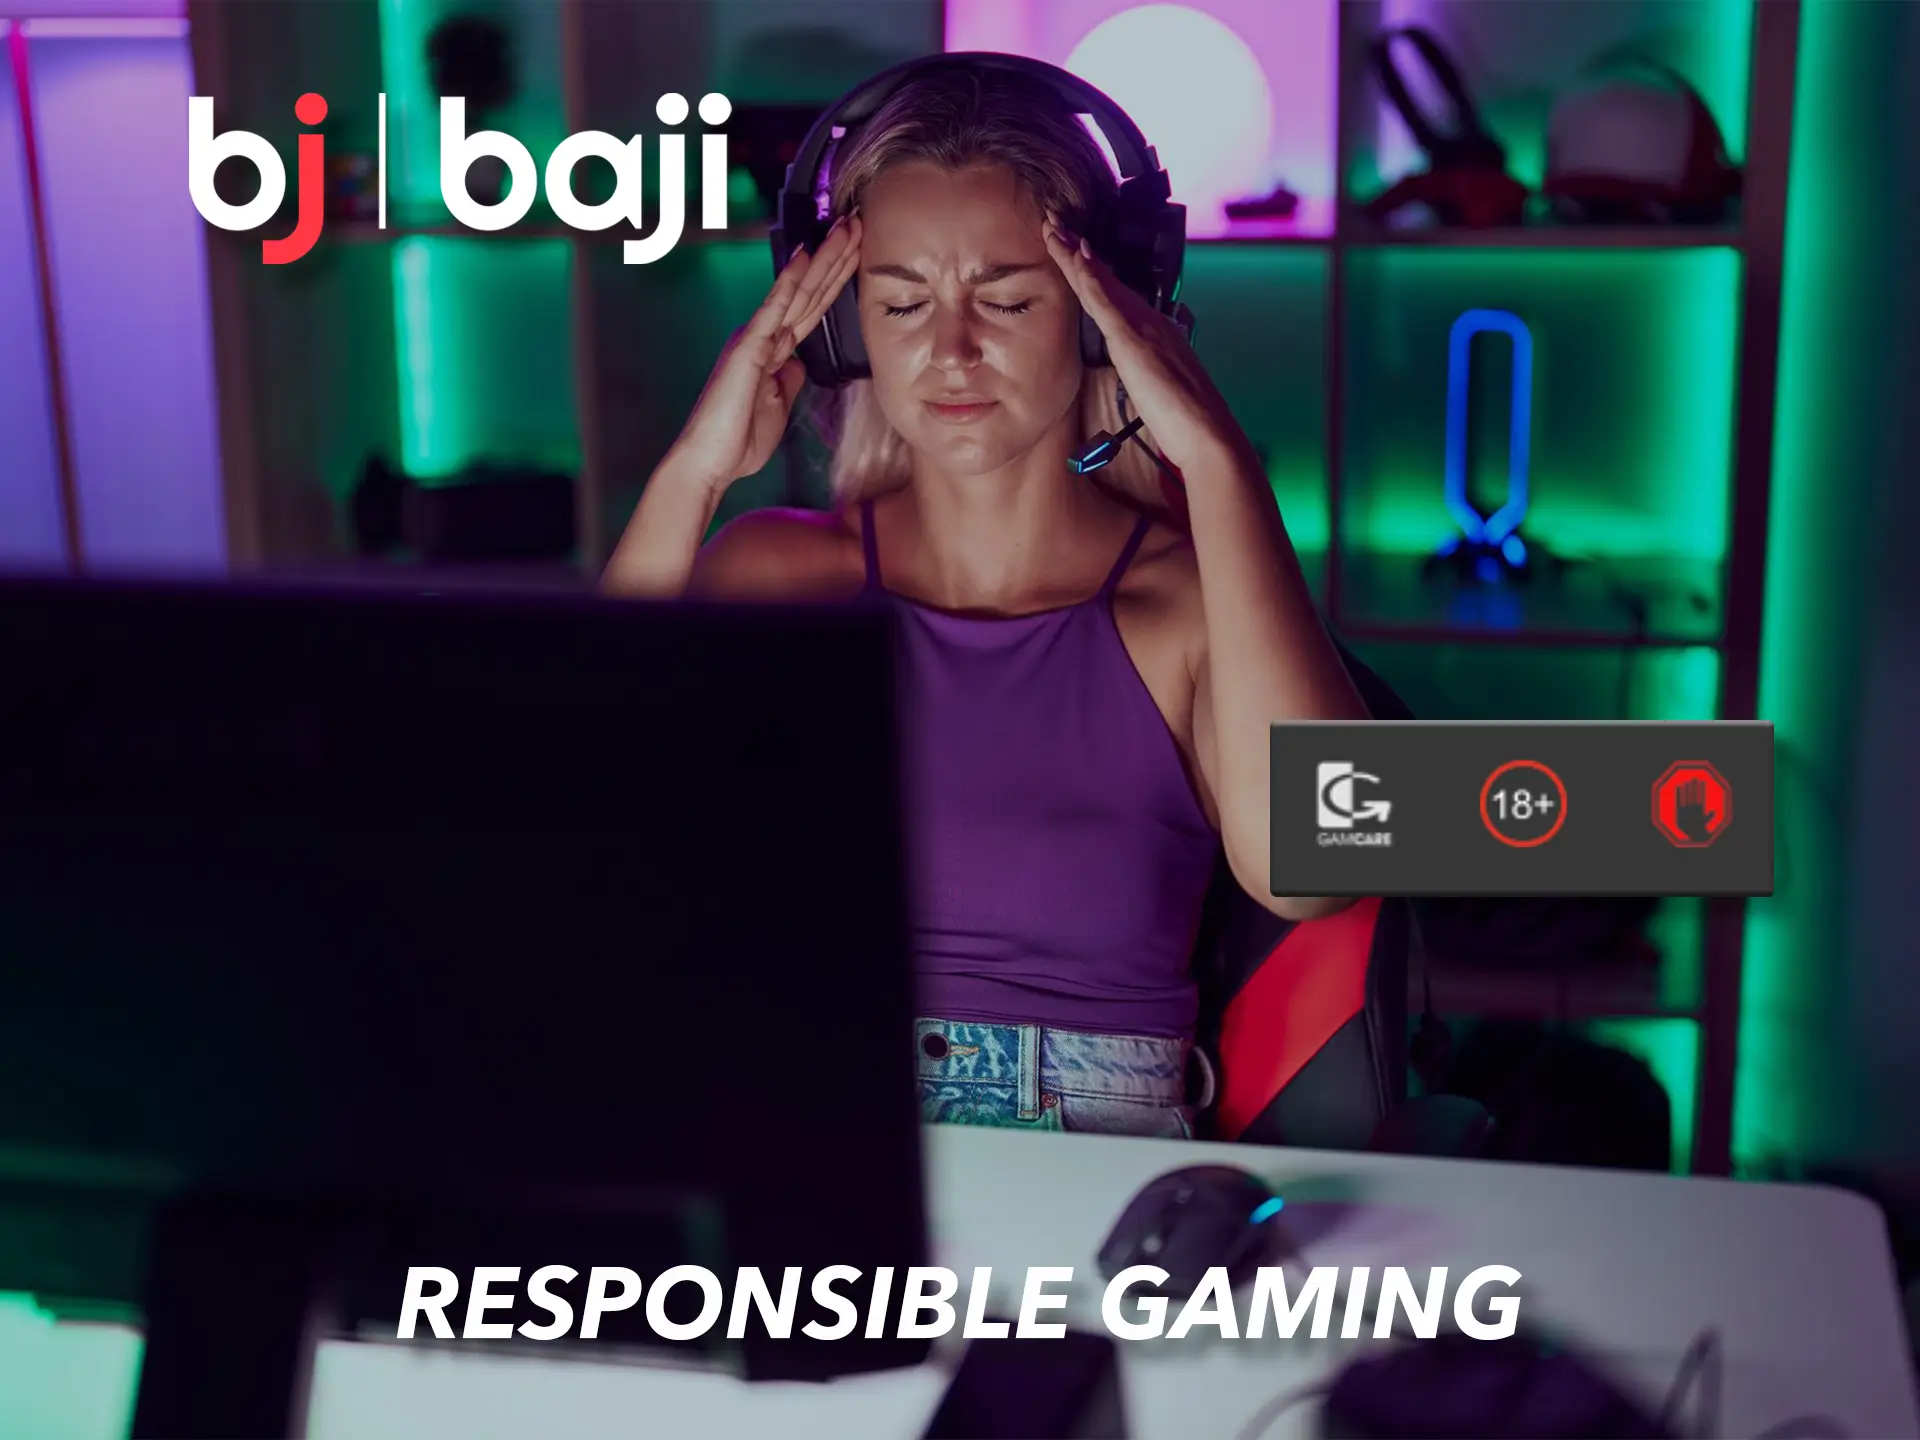 Take a break when playing and betting at Baji Casino.